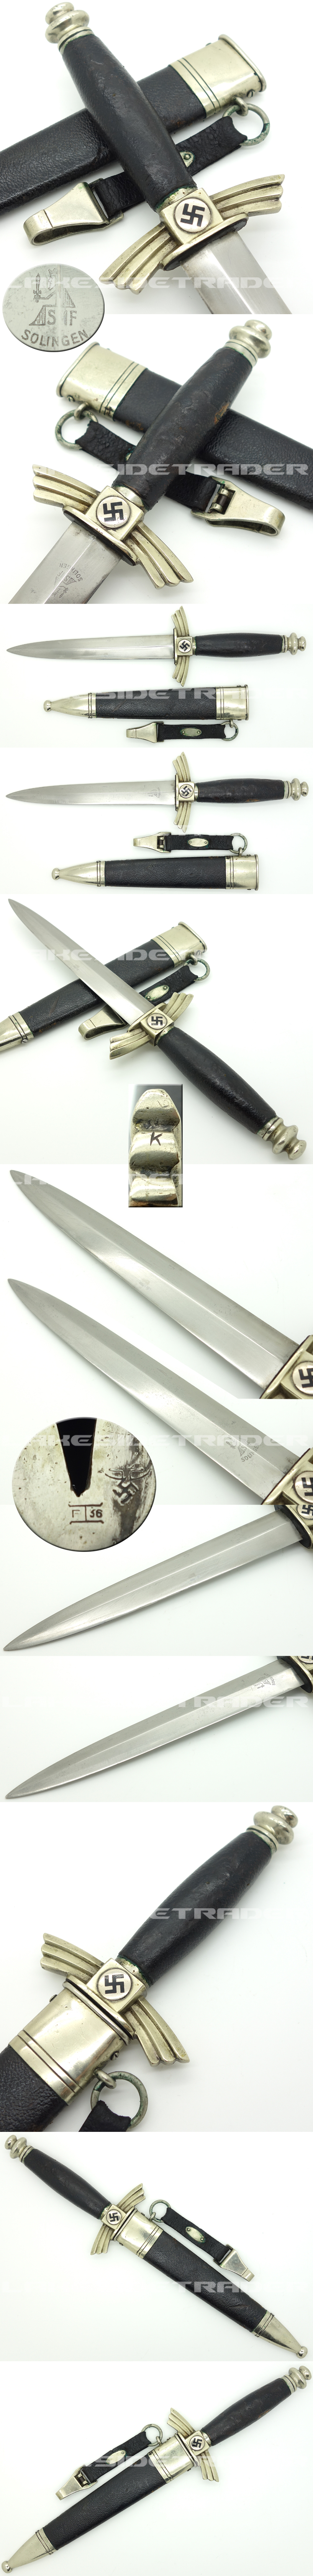 NSFK Knife by SMF